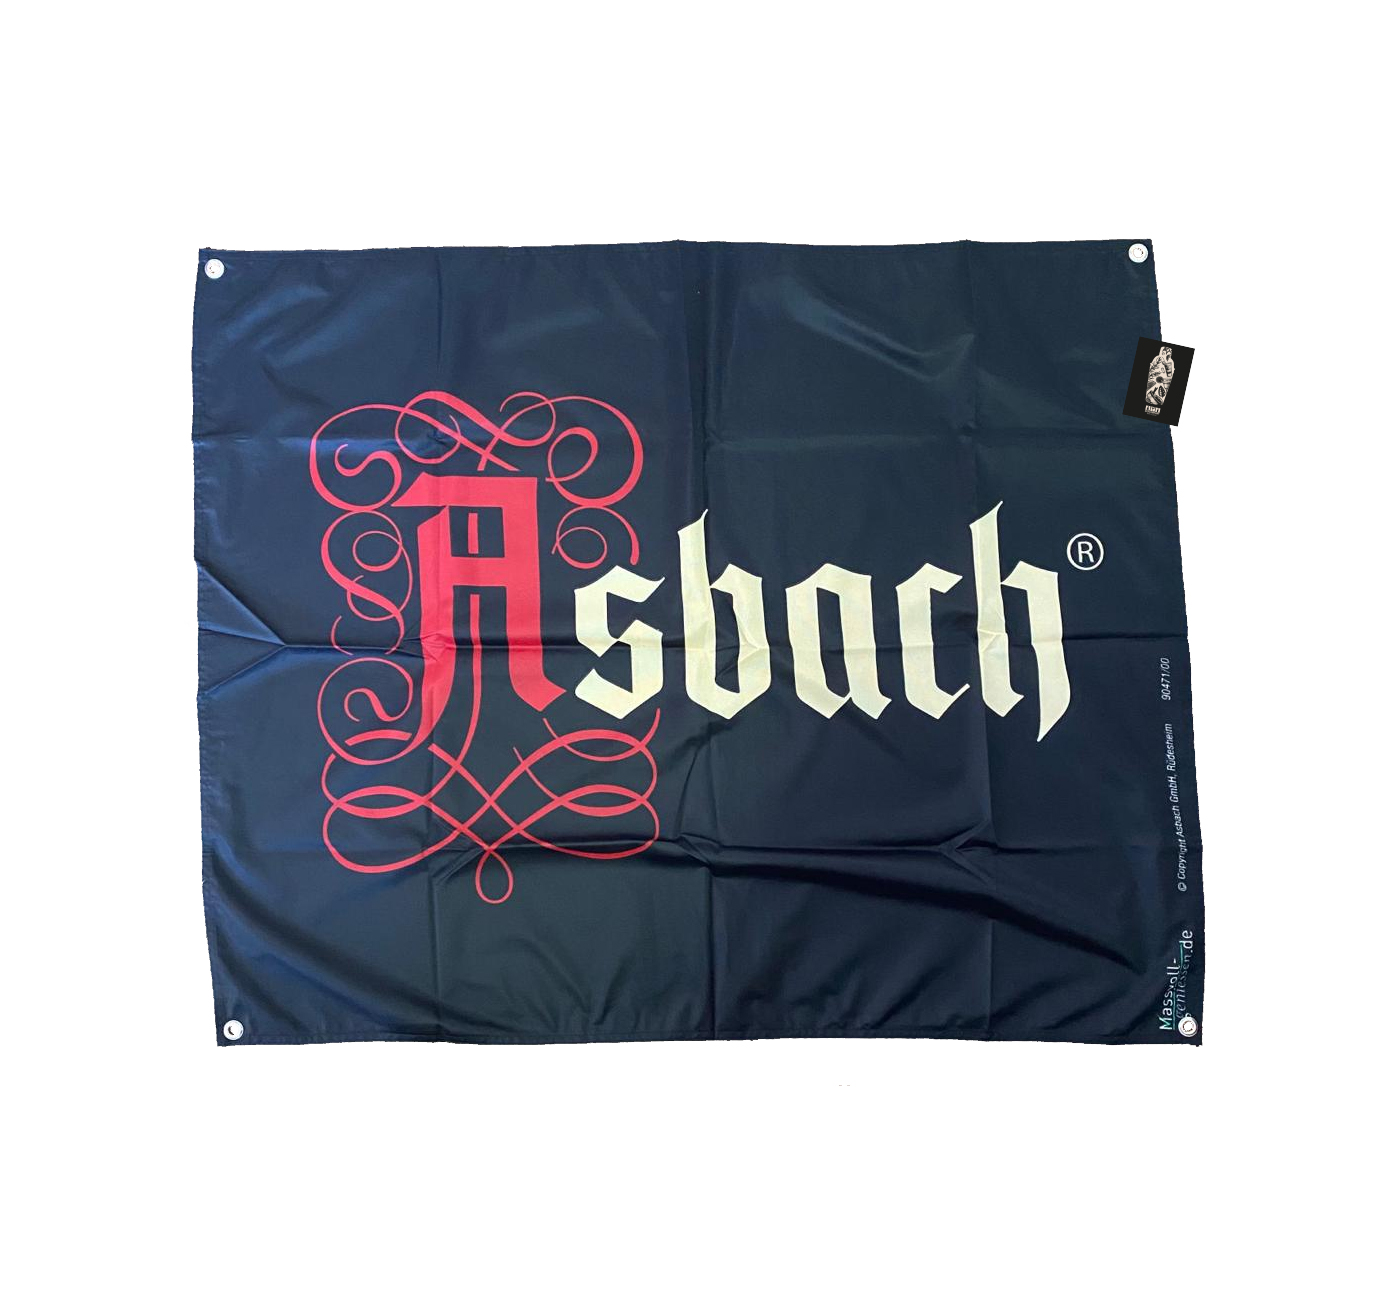 Asbach Banner Fahne Flagge Maße: 95 x 78 cm Material: Polyester inkl. Mixcompany Postkarte